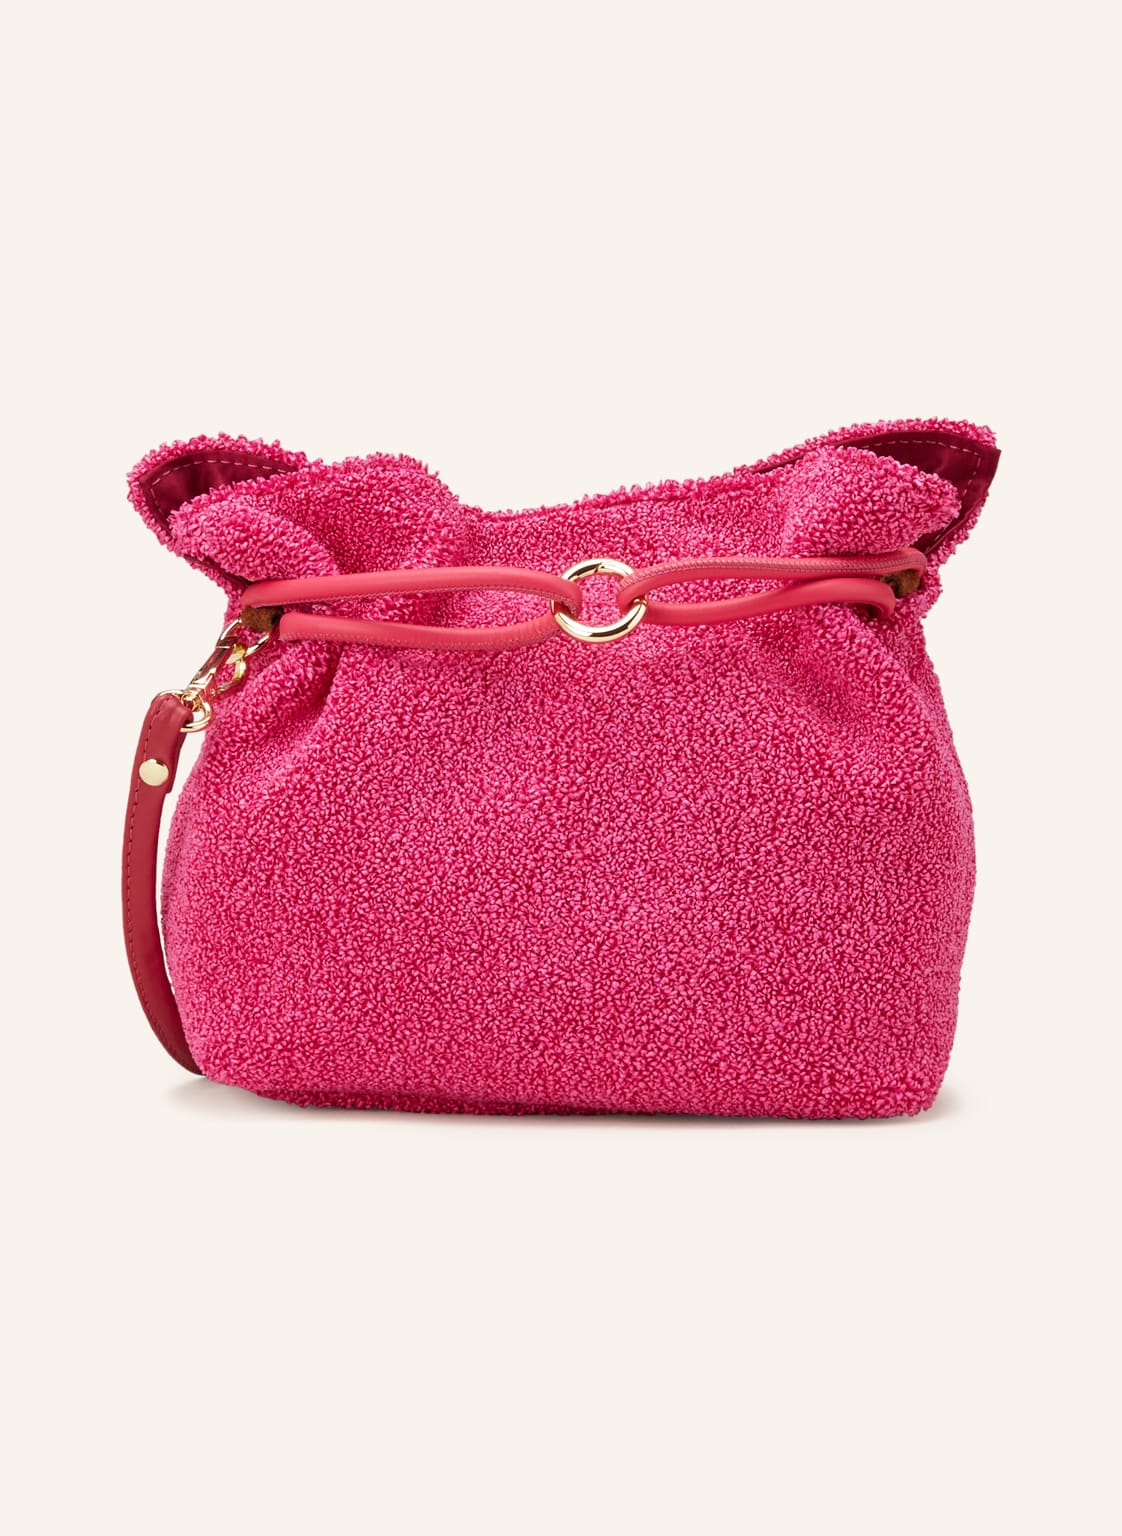 Image of Viamailbag Handtasche Aruba Soft pink